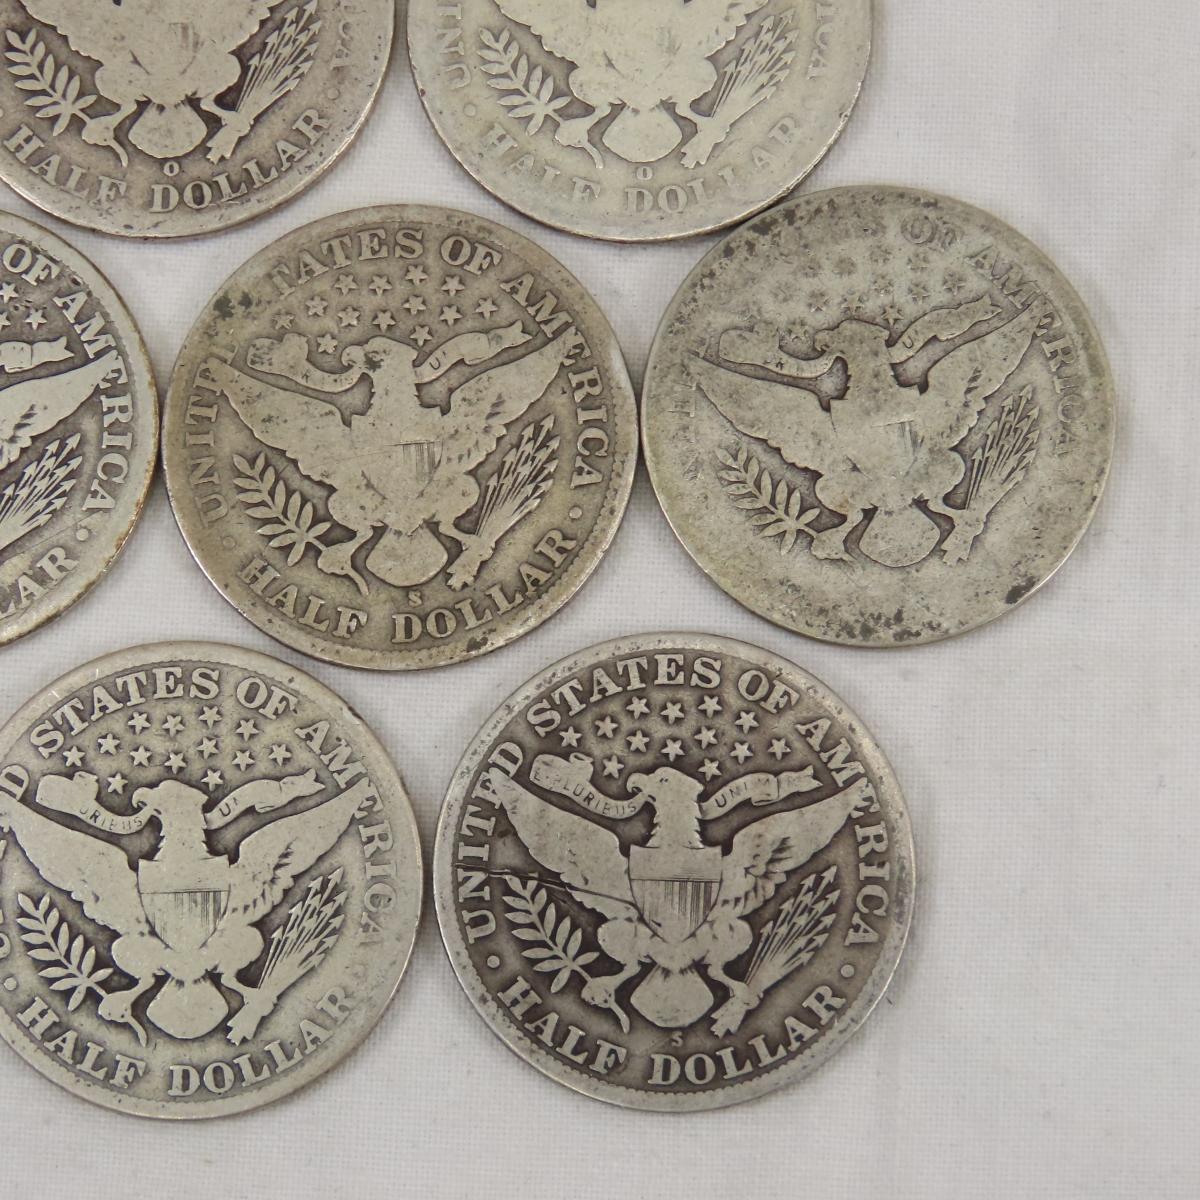 10 Barber Silver Half Dollars 1899-1913